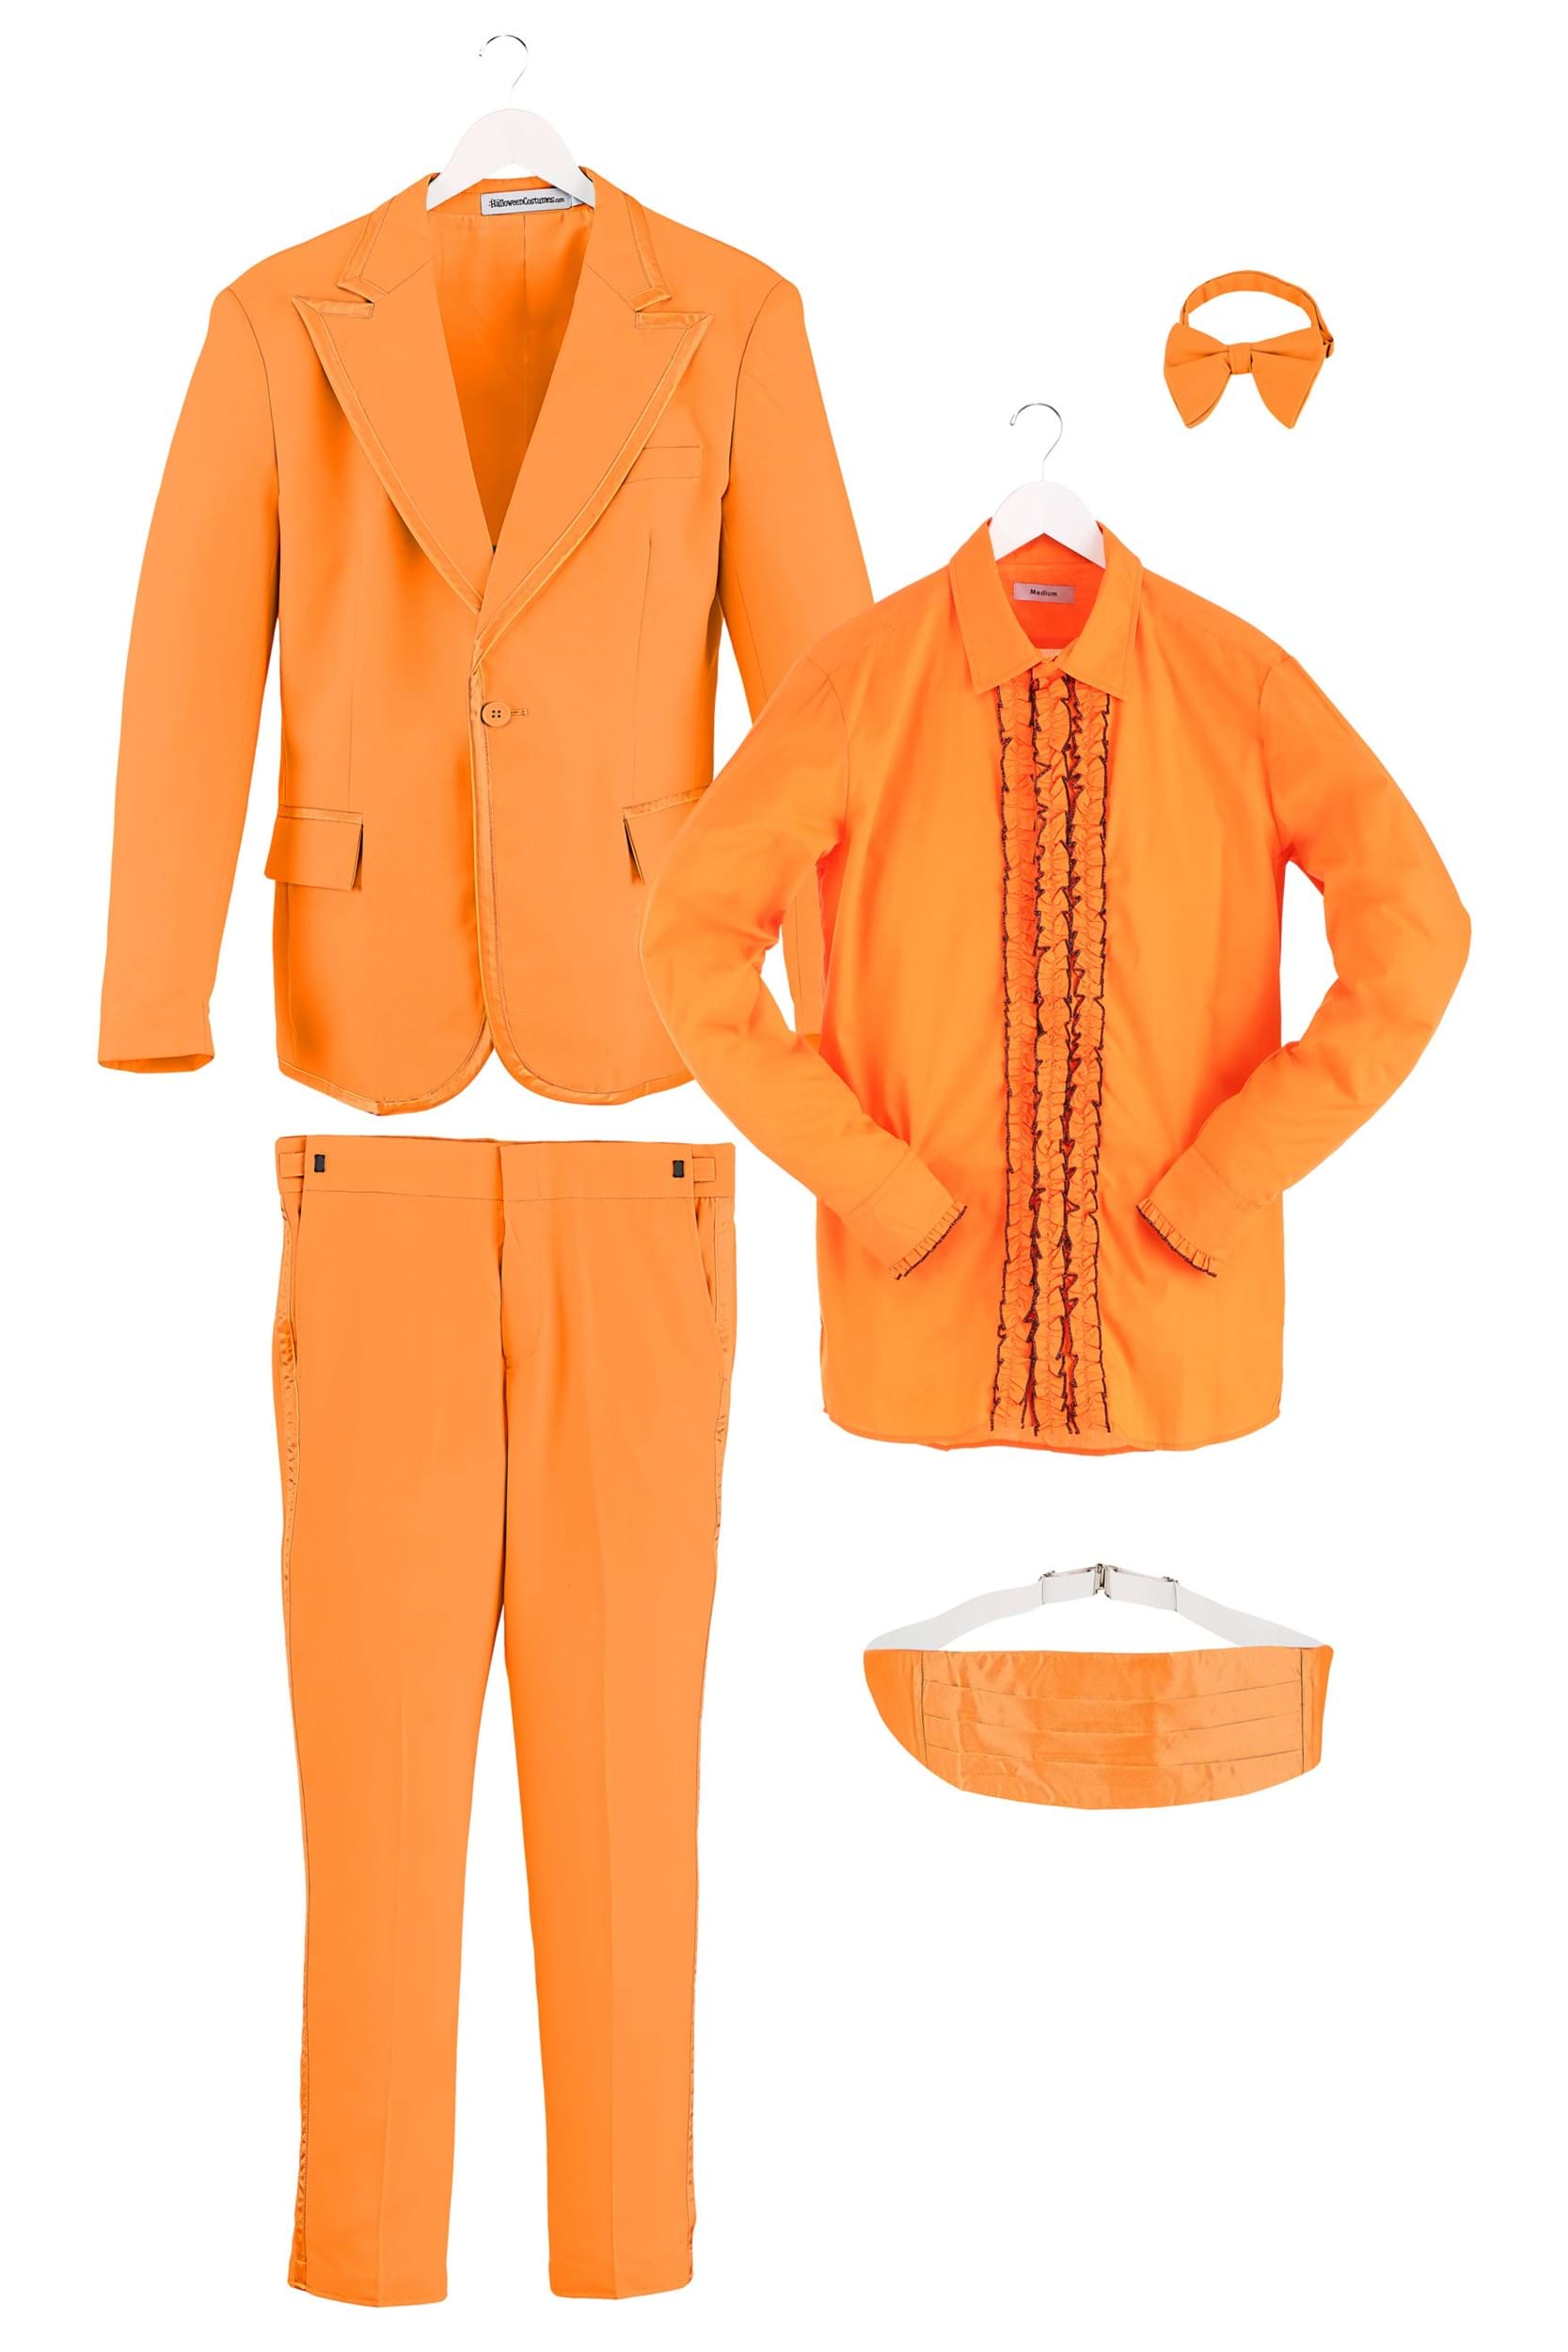 Adult Orange Tuxedo Fancy Dress Costume